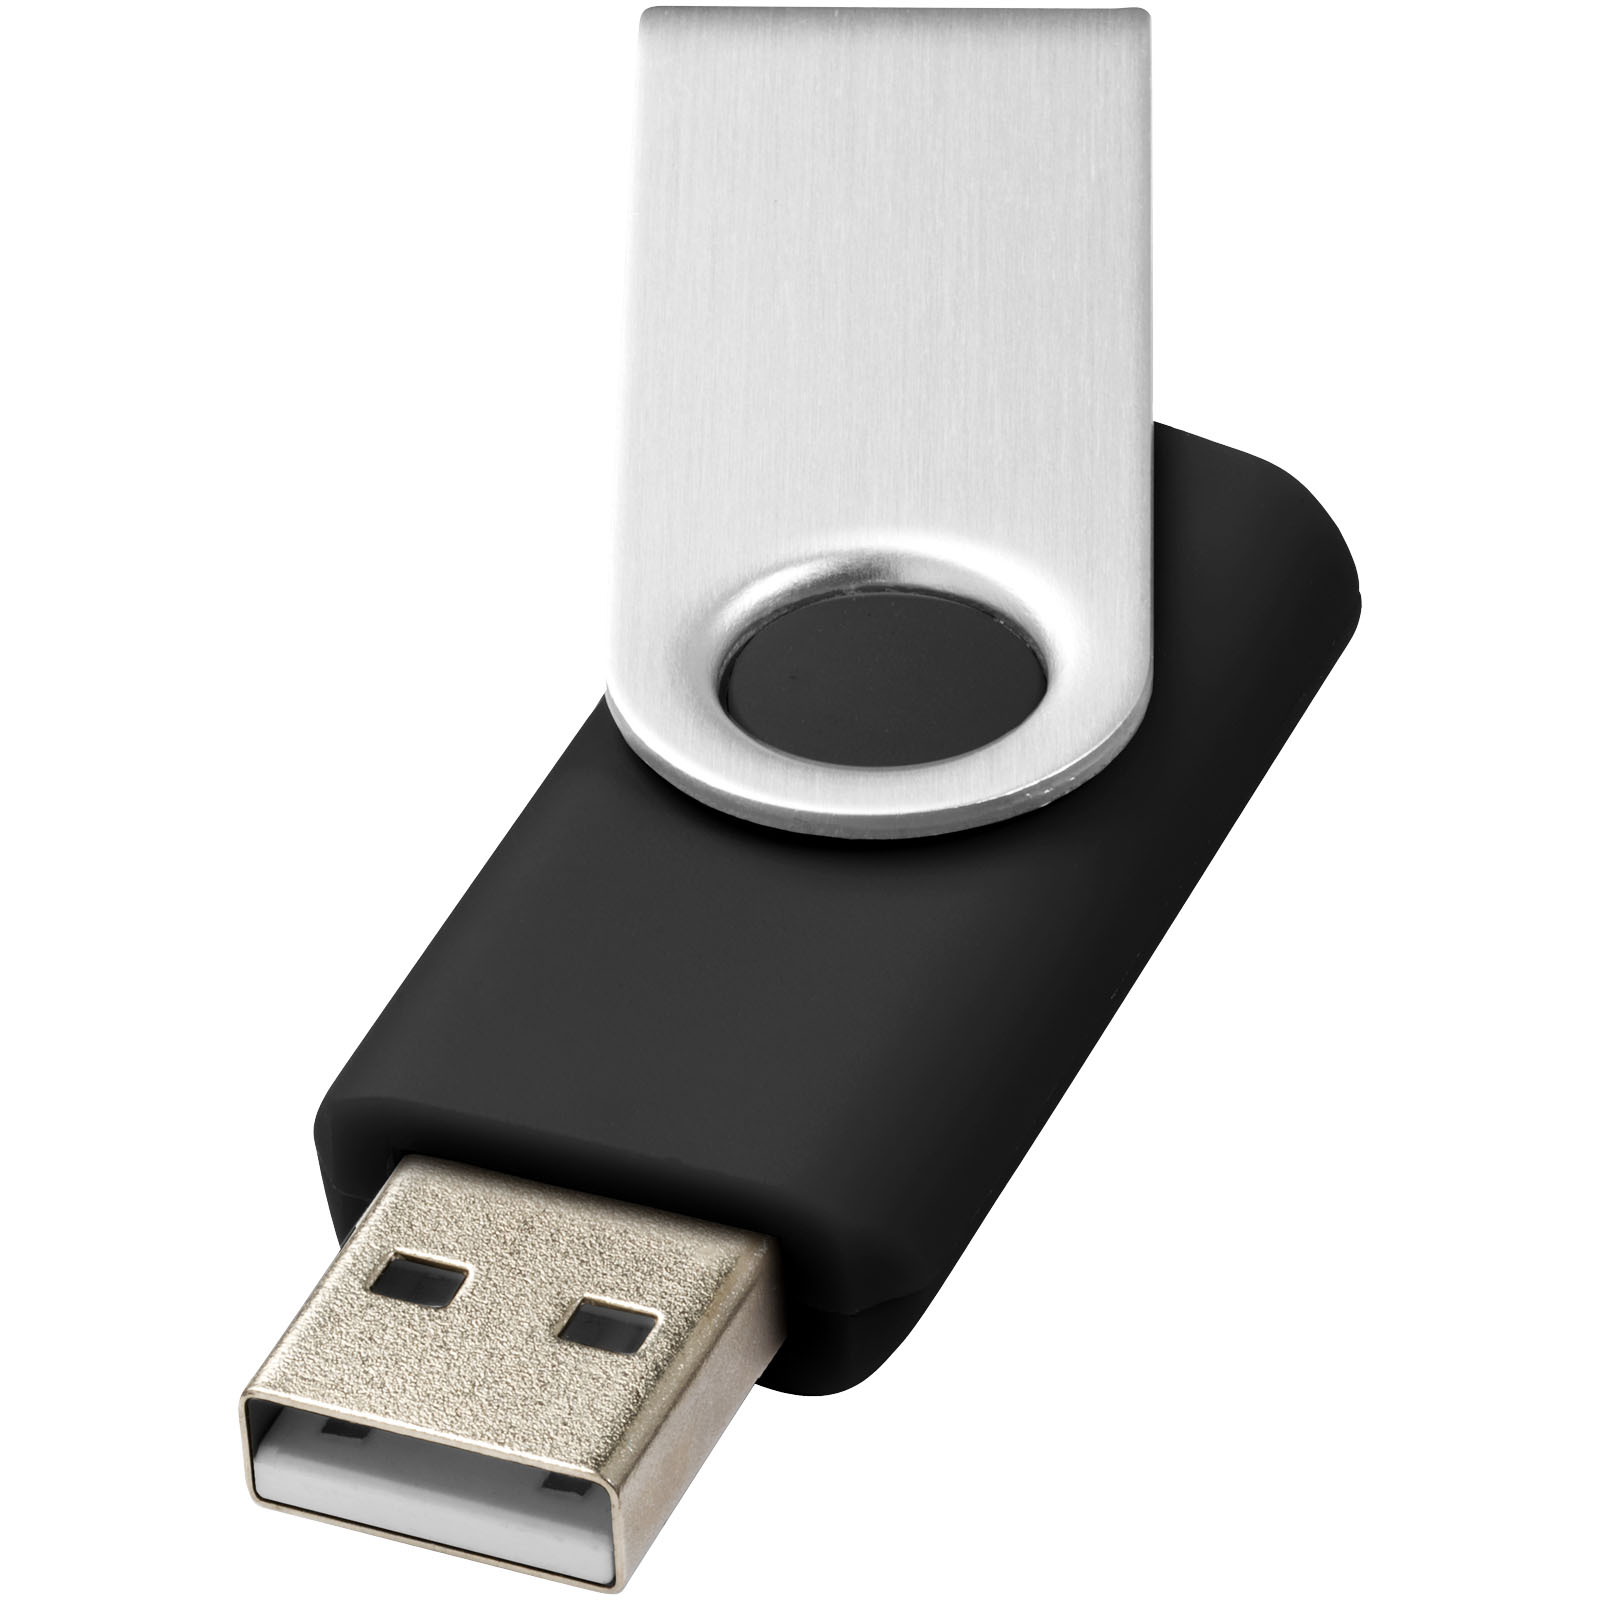 USB Flash Drives - Rotate-basic 32GB USB flash drive